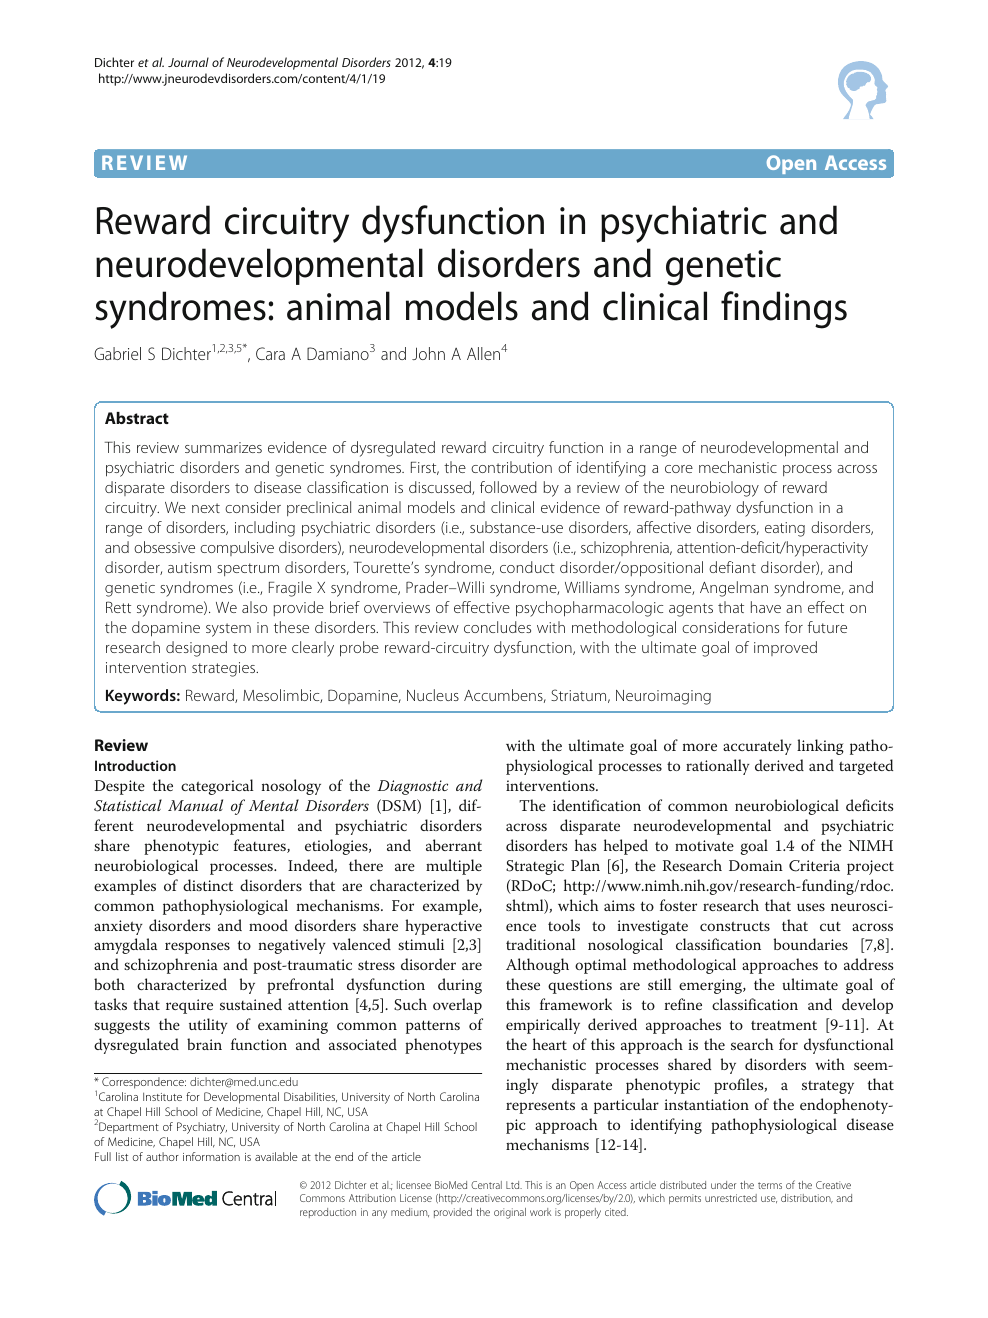 Reward circuitry dysfunction in psychiatric and neurodevelopmental 